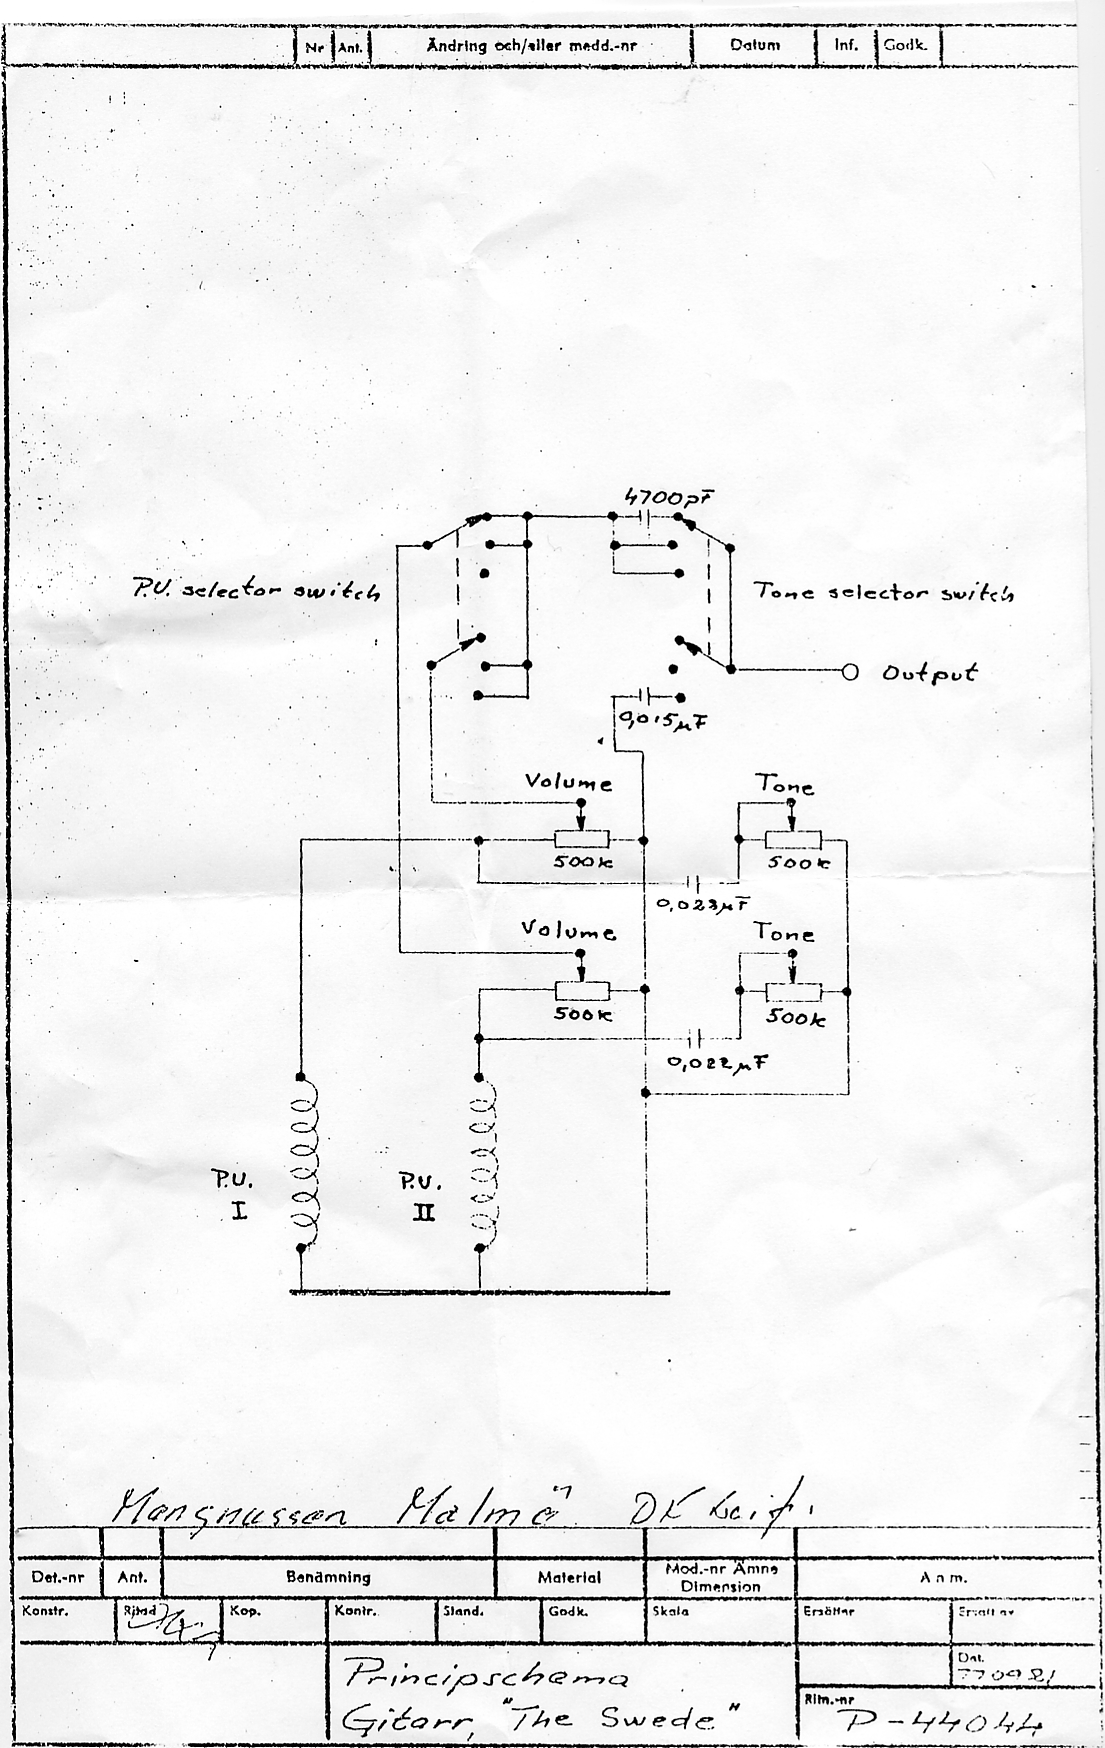 hagstrom super swede wiring diagram